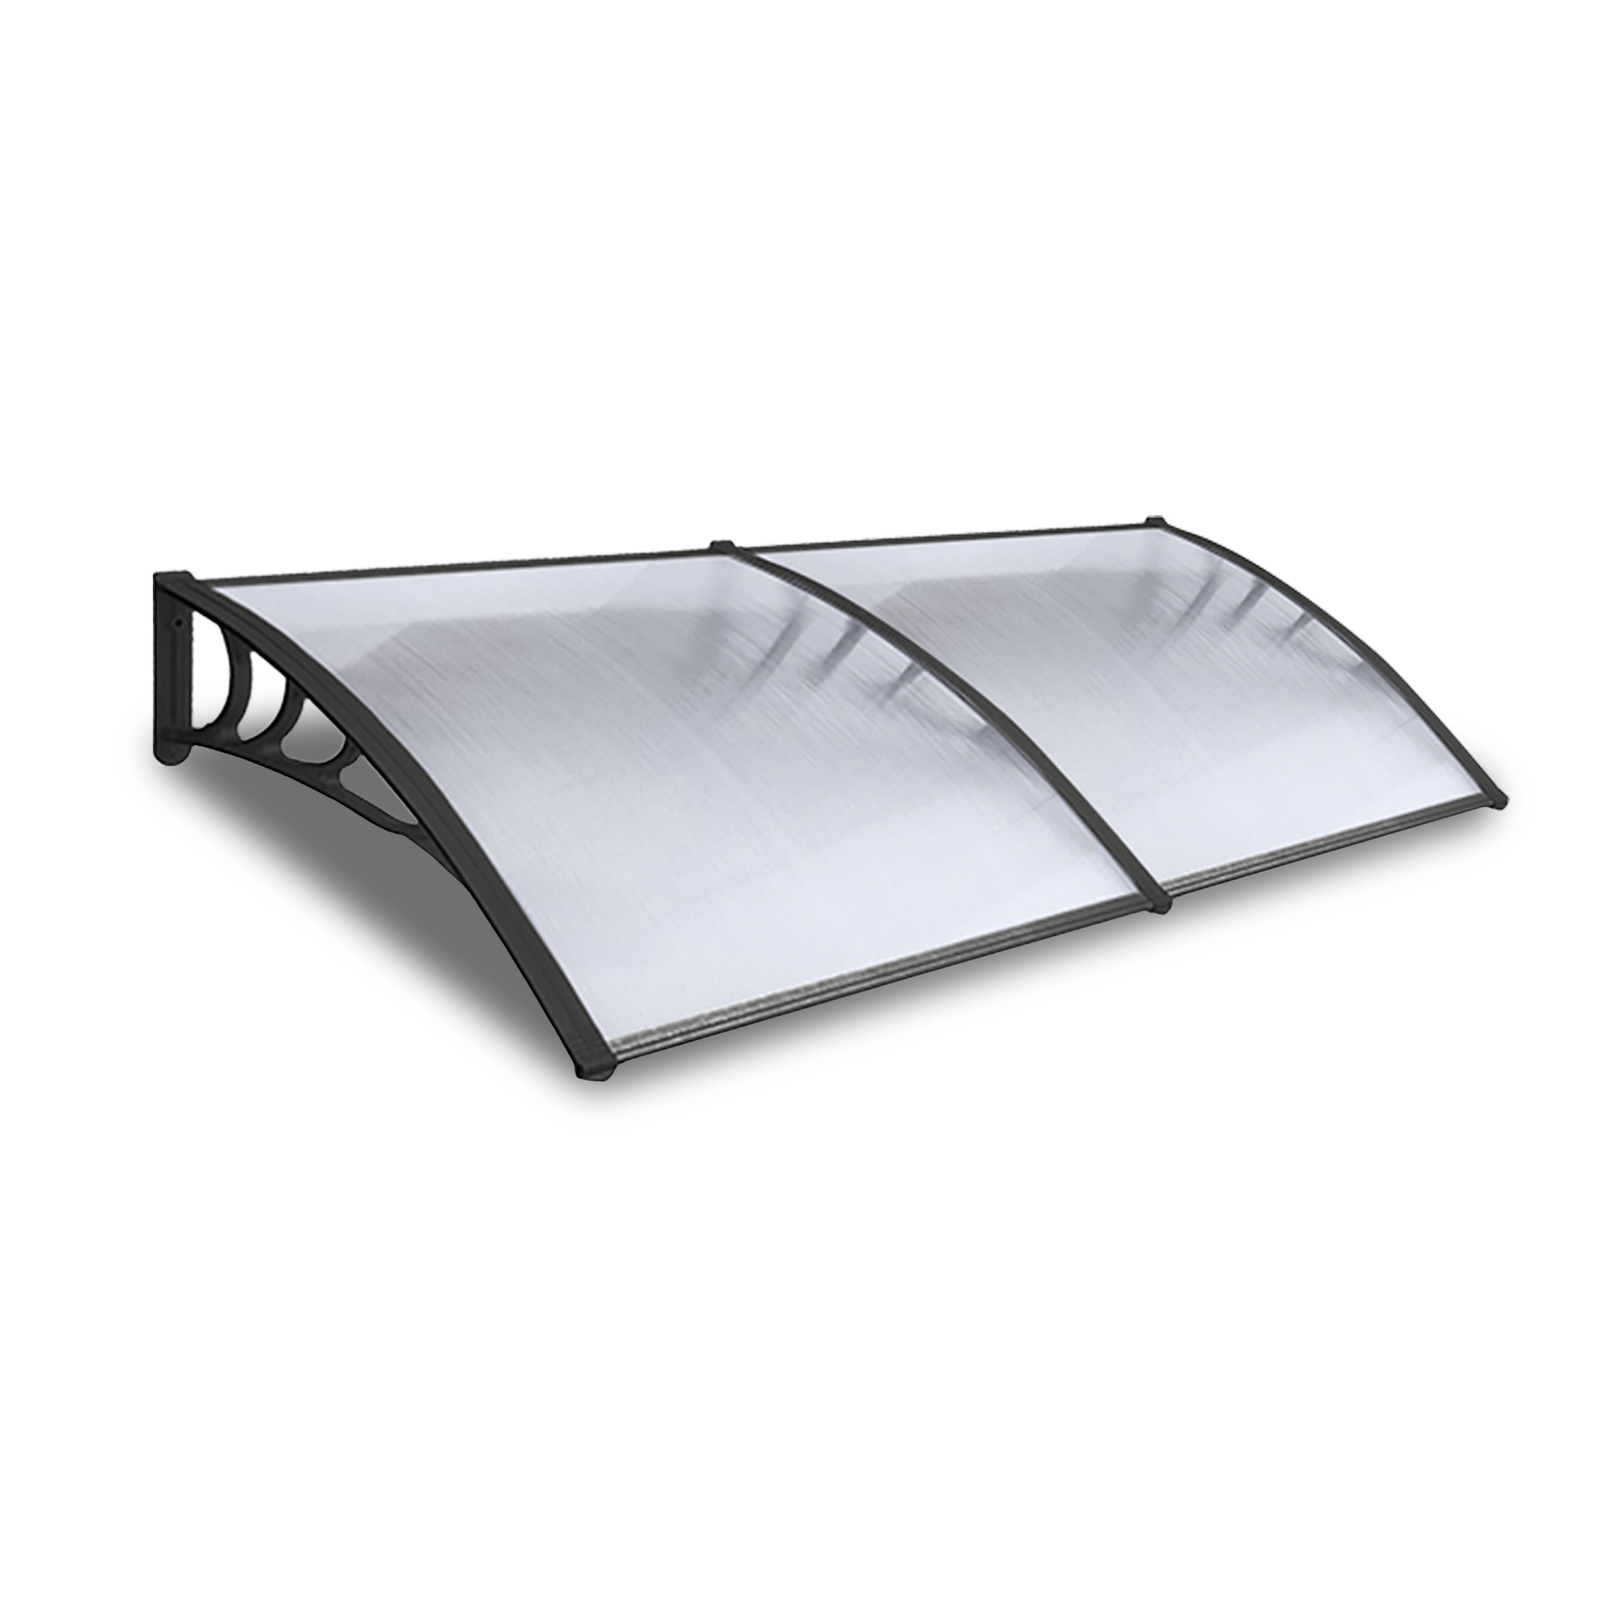 2.4 x 1M Window Door Awning Canopy Outdoor Patio UV Sun Shield Shade Waterproof Cover Rain Canopy